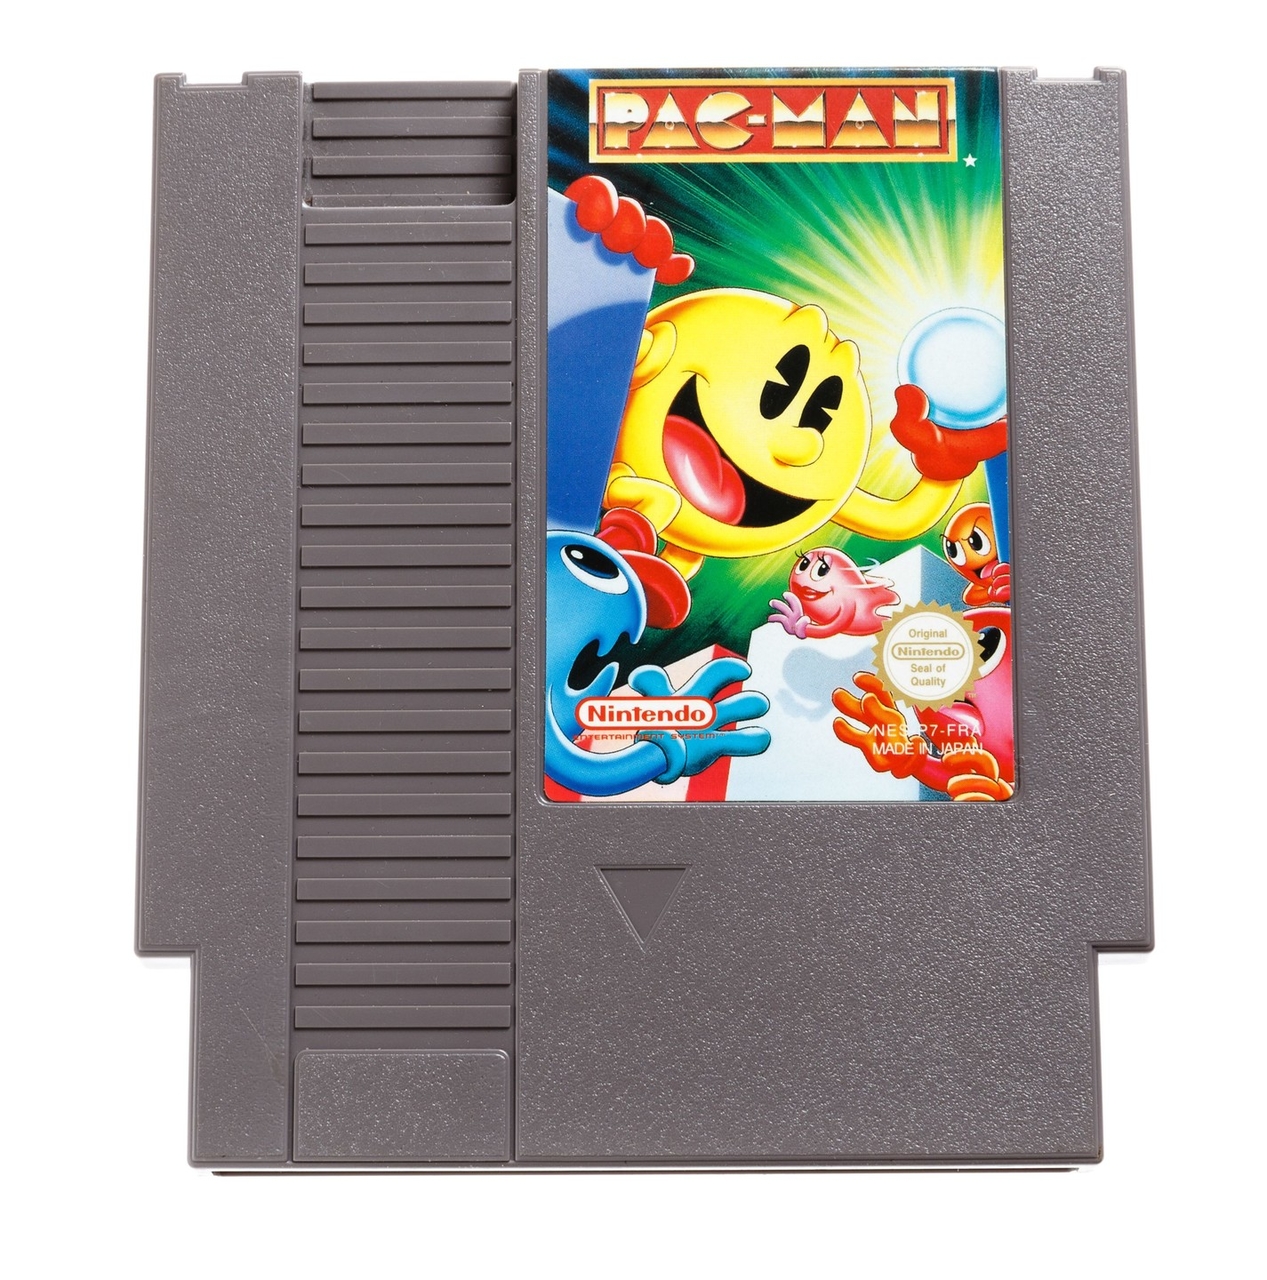 Pac-Man - Nintendo NES Games